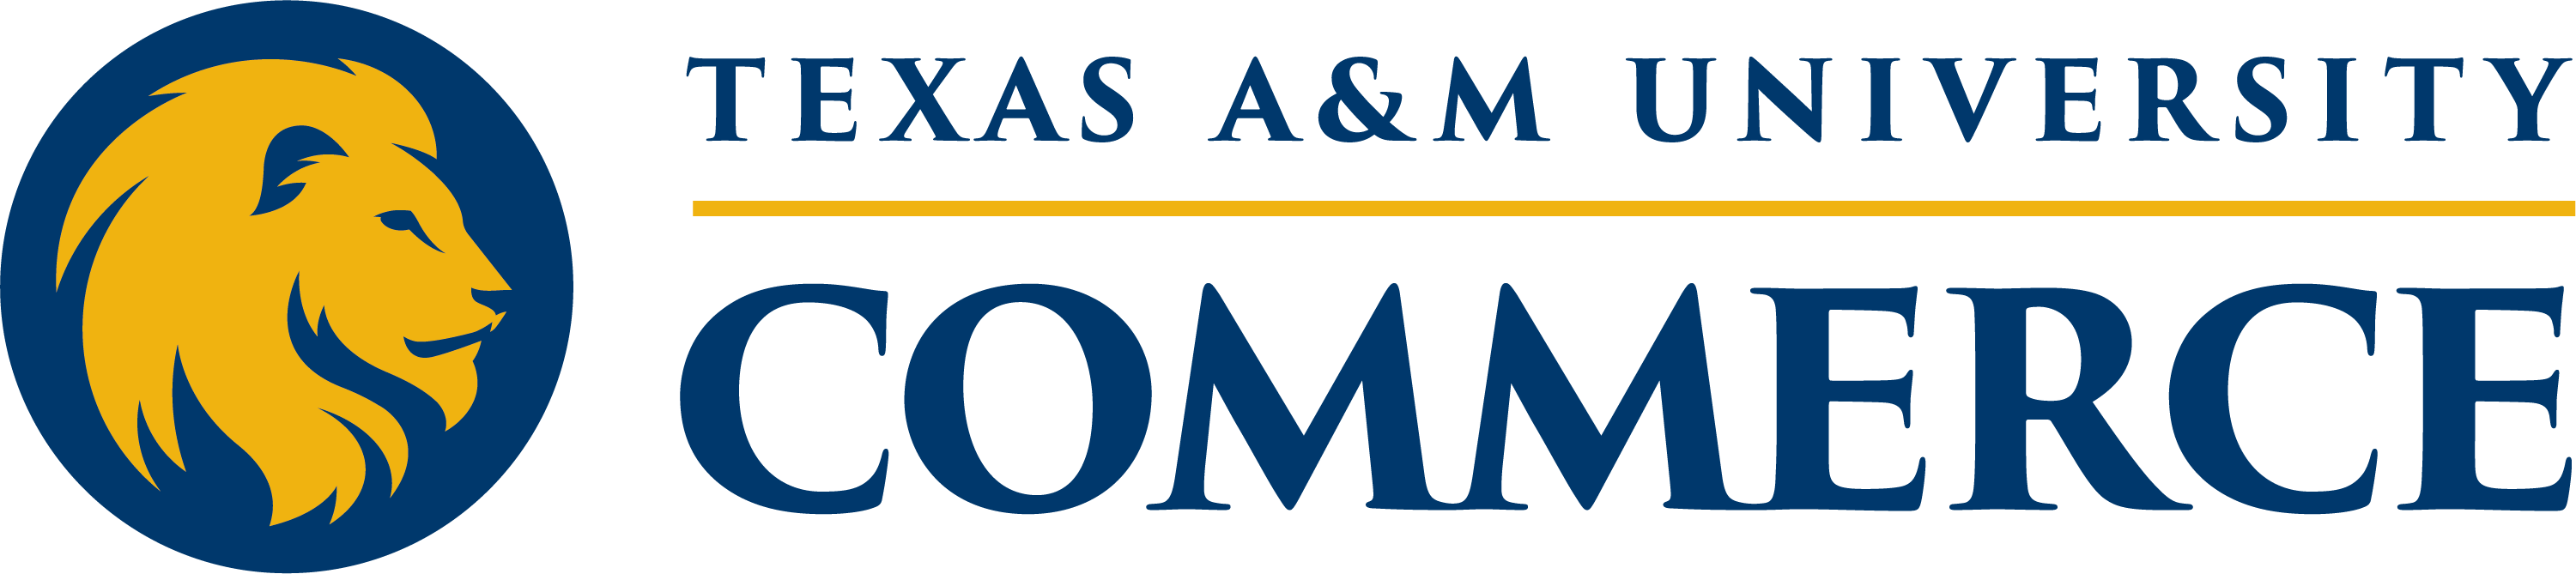 Commerce Logo - Logo Downloads - Texas A&M University-Commerce